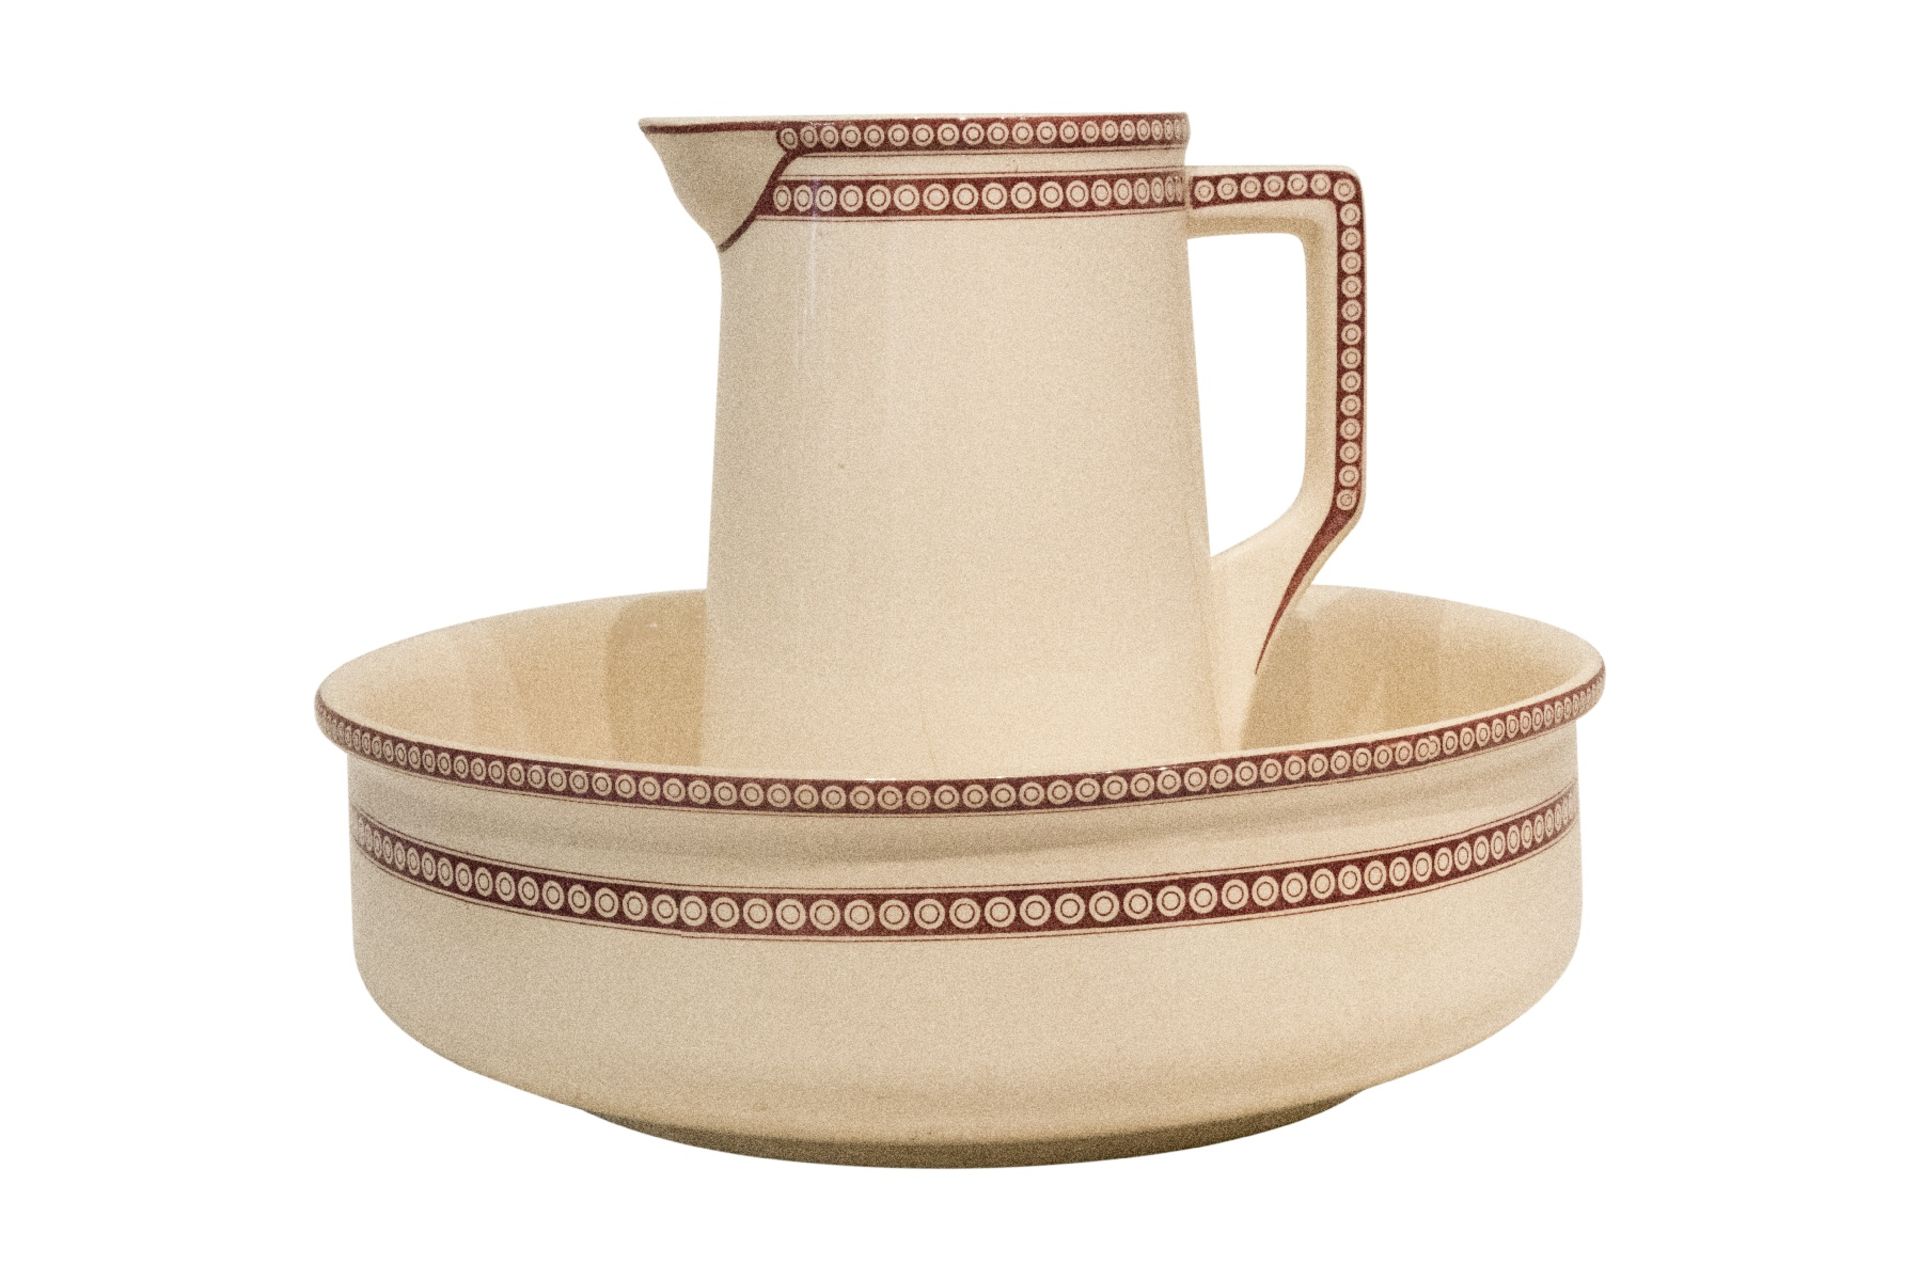 Villeroy & Boch Anitkes Wasch Set Keramik | Villeroy & Boch Anitkes Wash Set Ceramic - Image 2 of 5